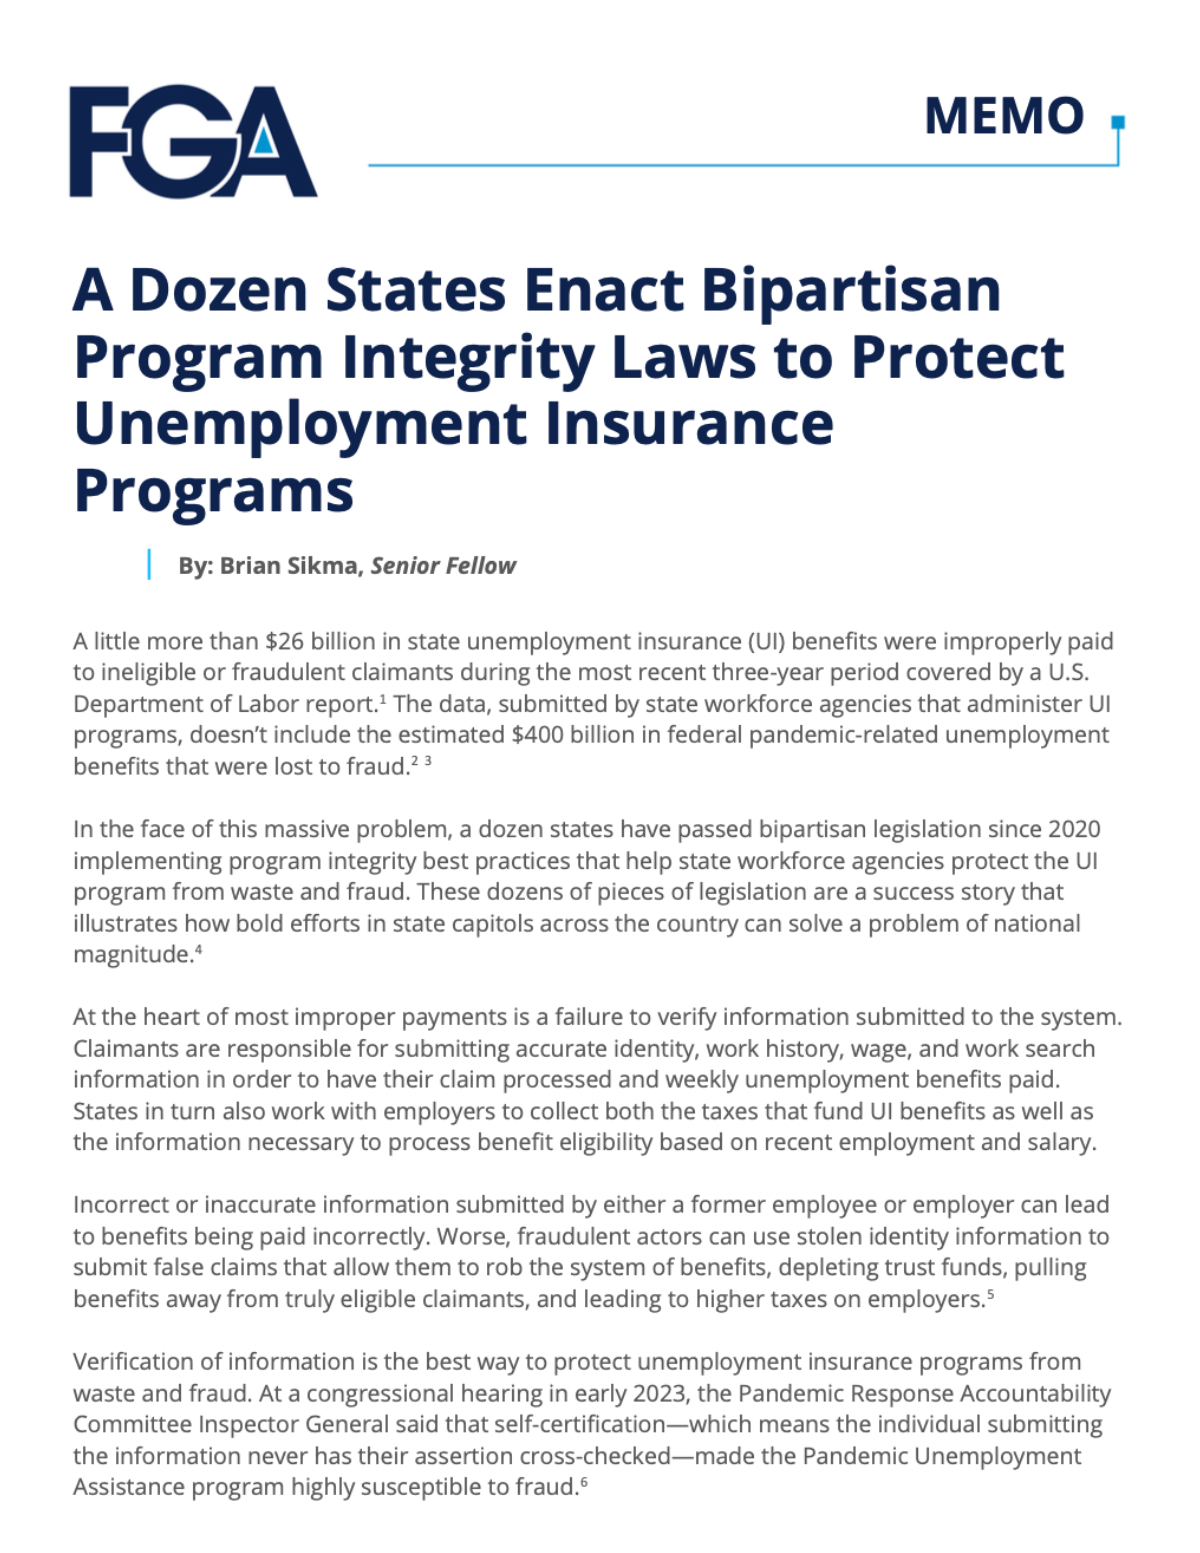 A Dozen States Enact Bipartisan Program Integrity Laws to Protect Unemployment Insurance Programs